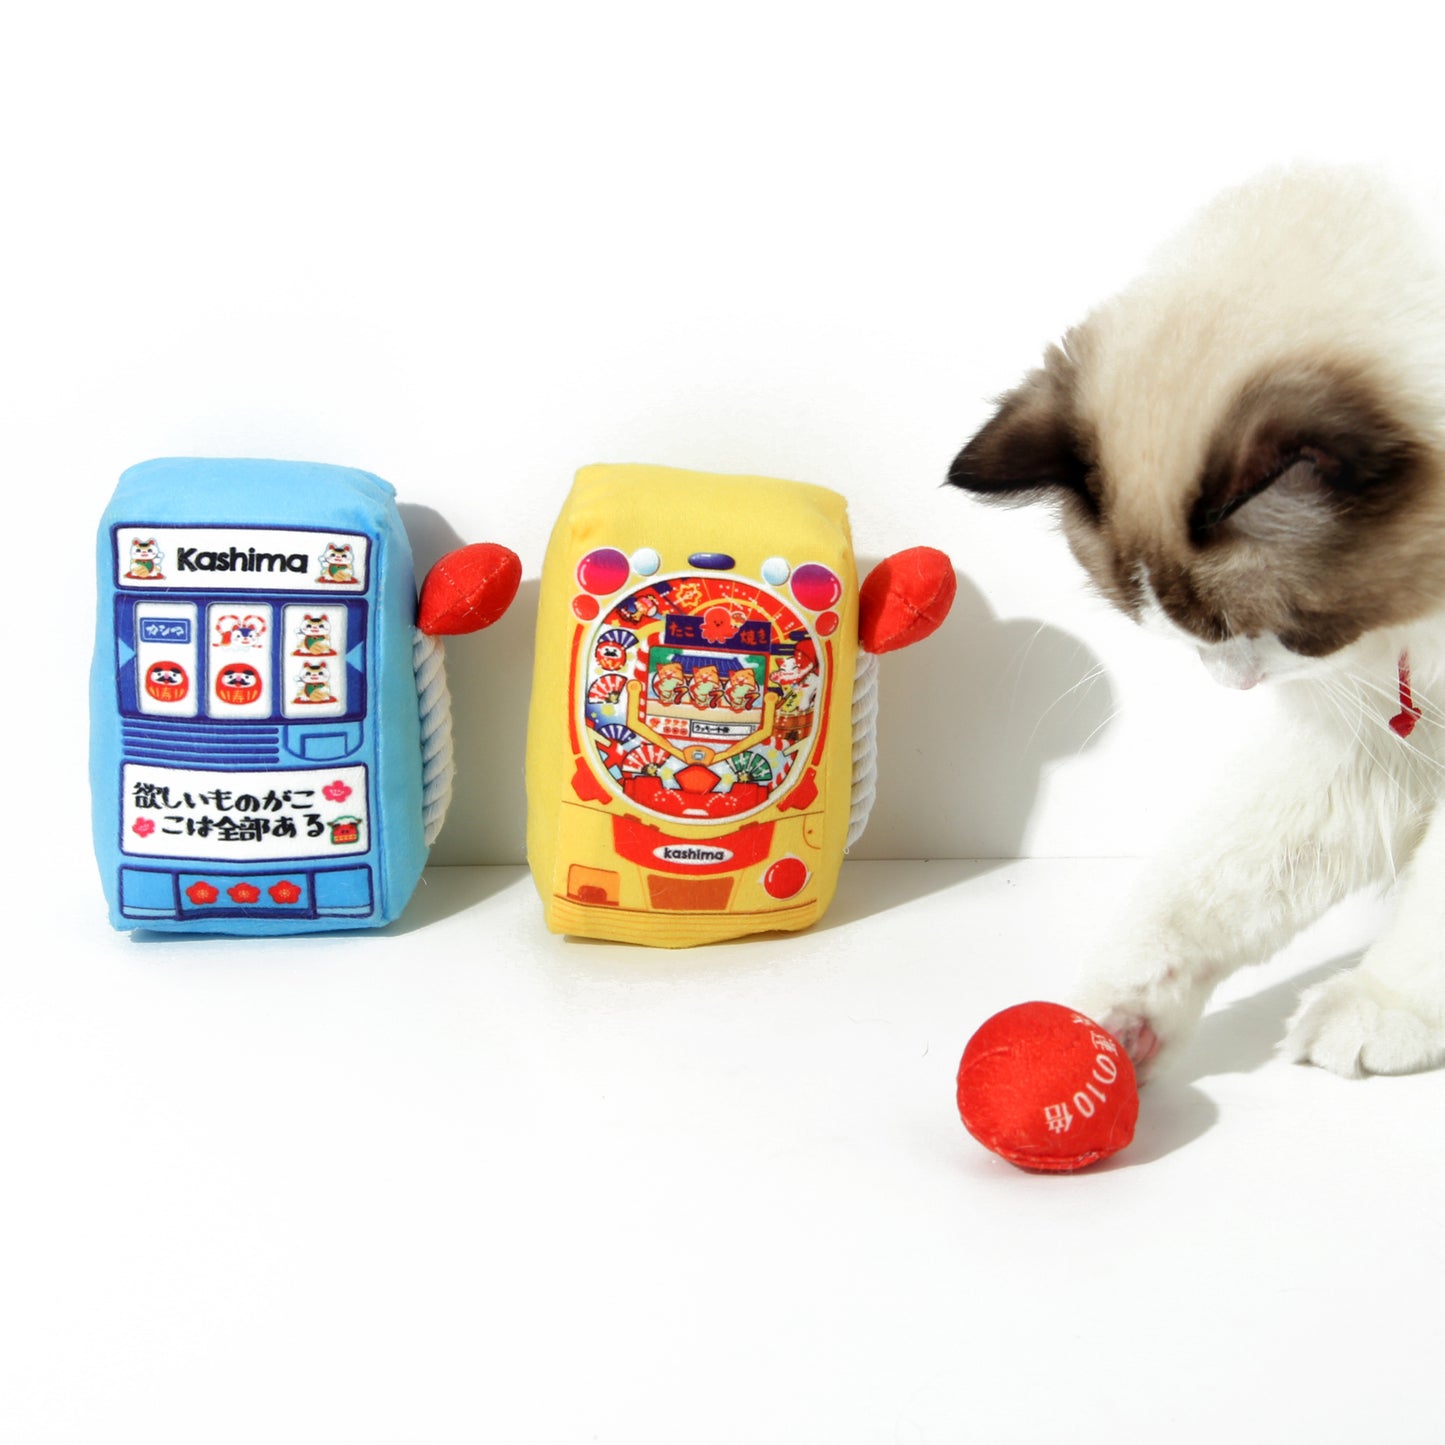 Kashima Game Machine Shaped Pet Toy